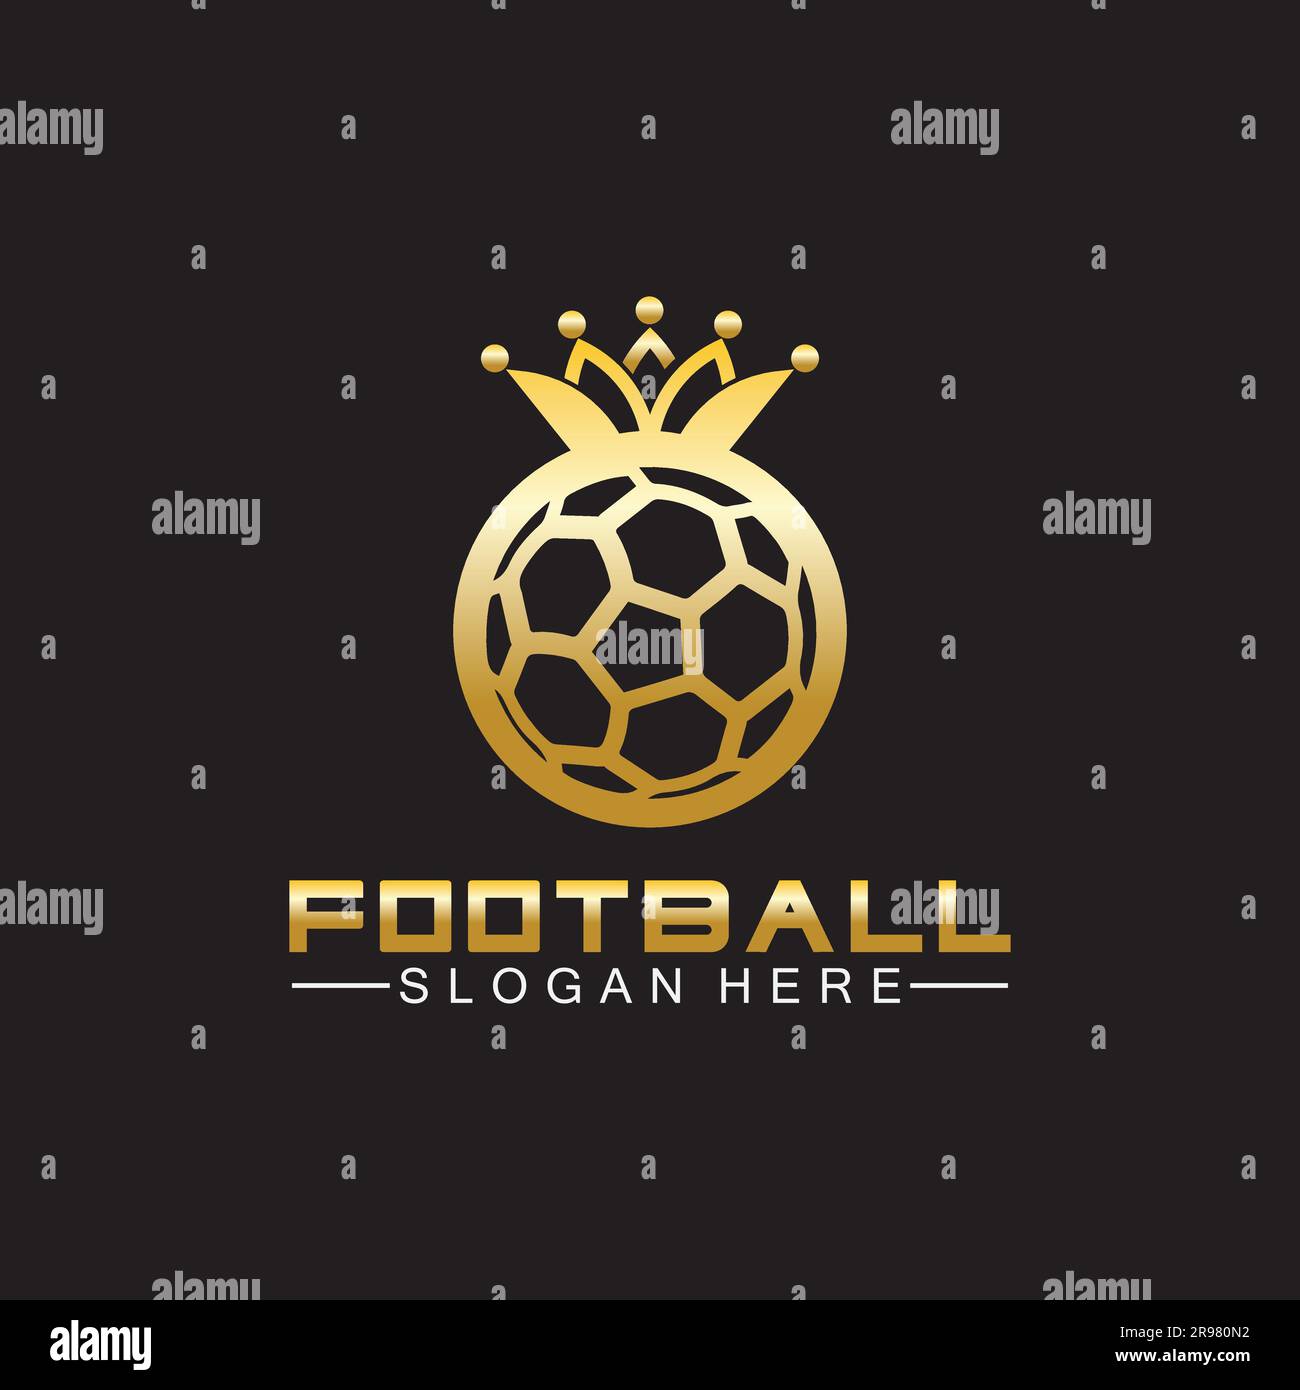 Luxury golden football king logo design on isolated black background